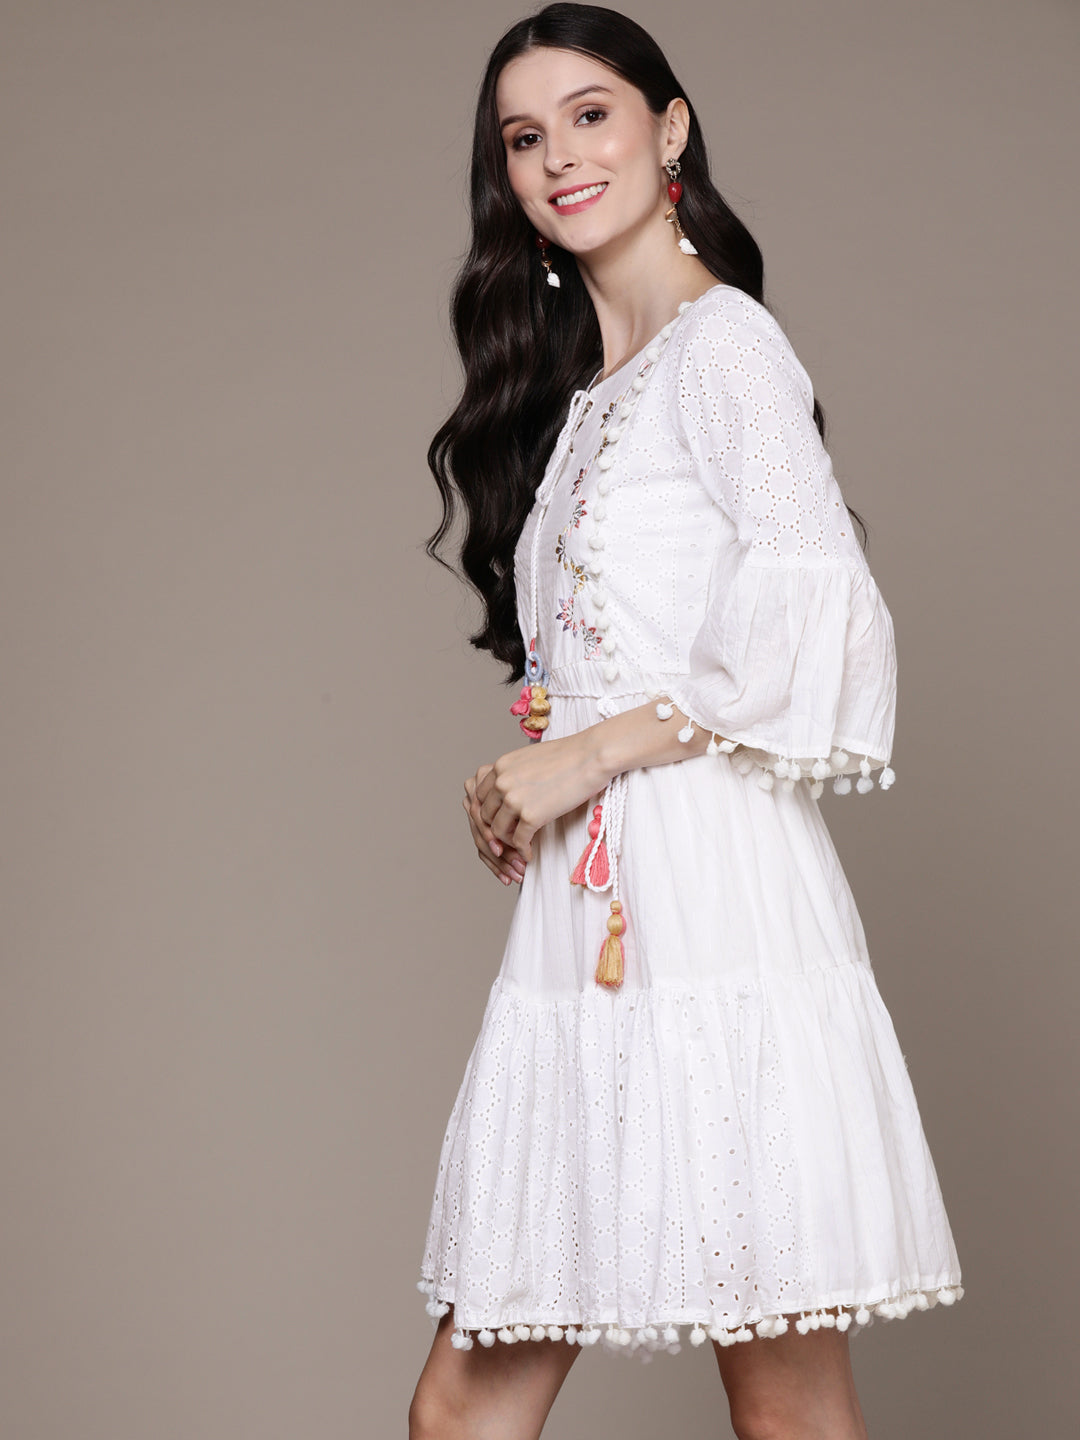 Ishin Women's White Schiffli Embroidered A-Line Dress